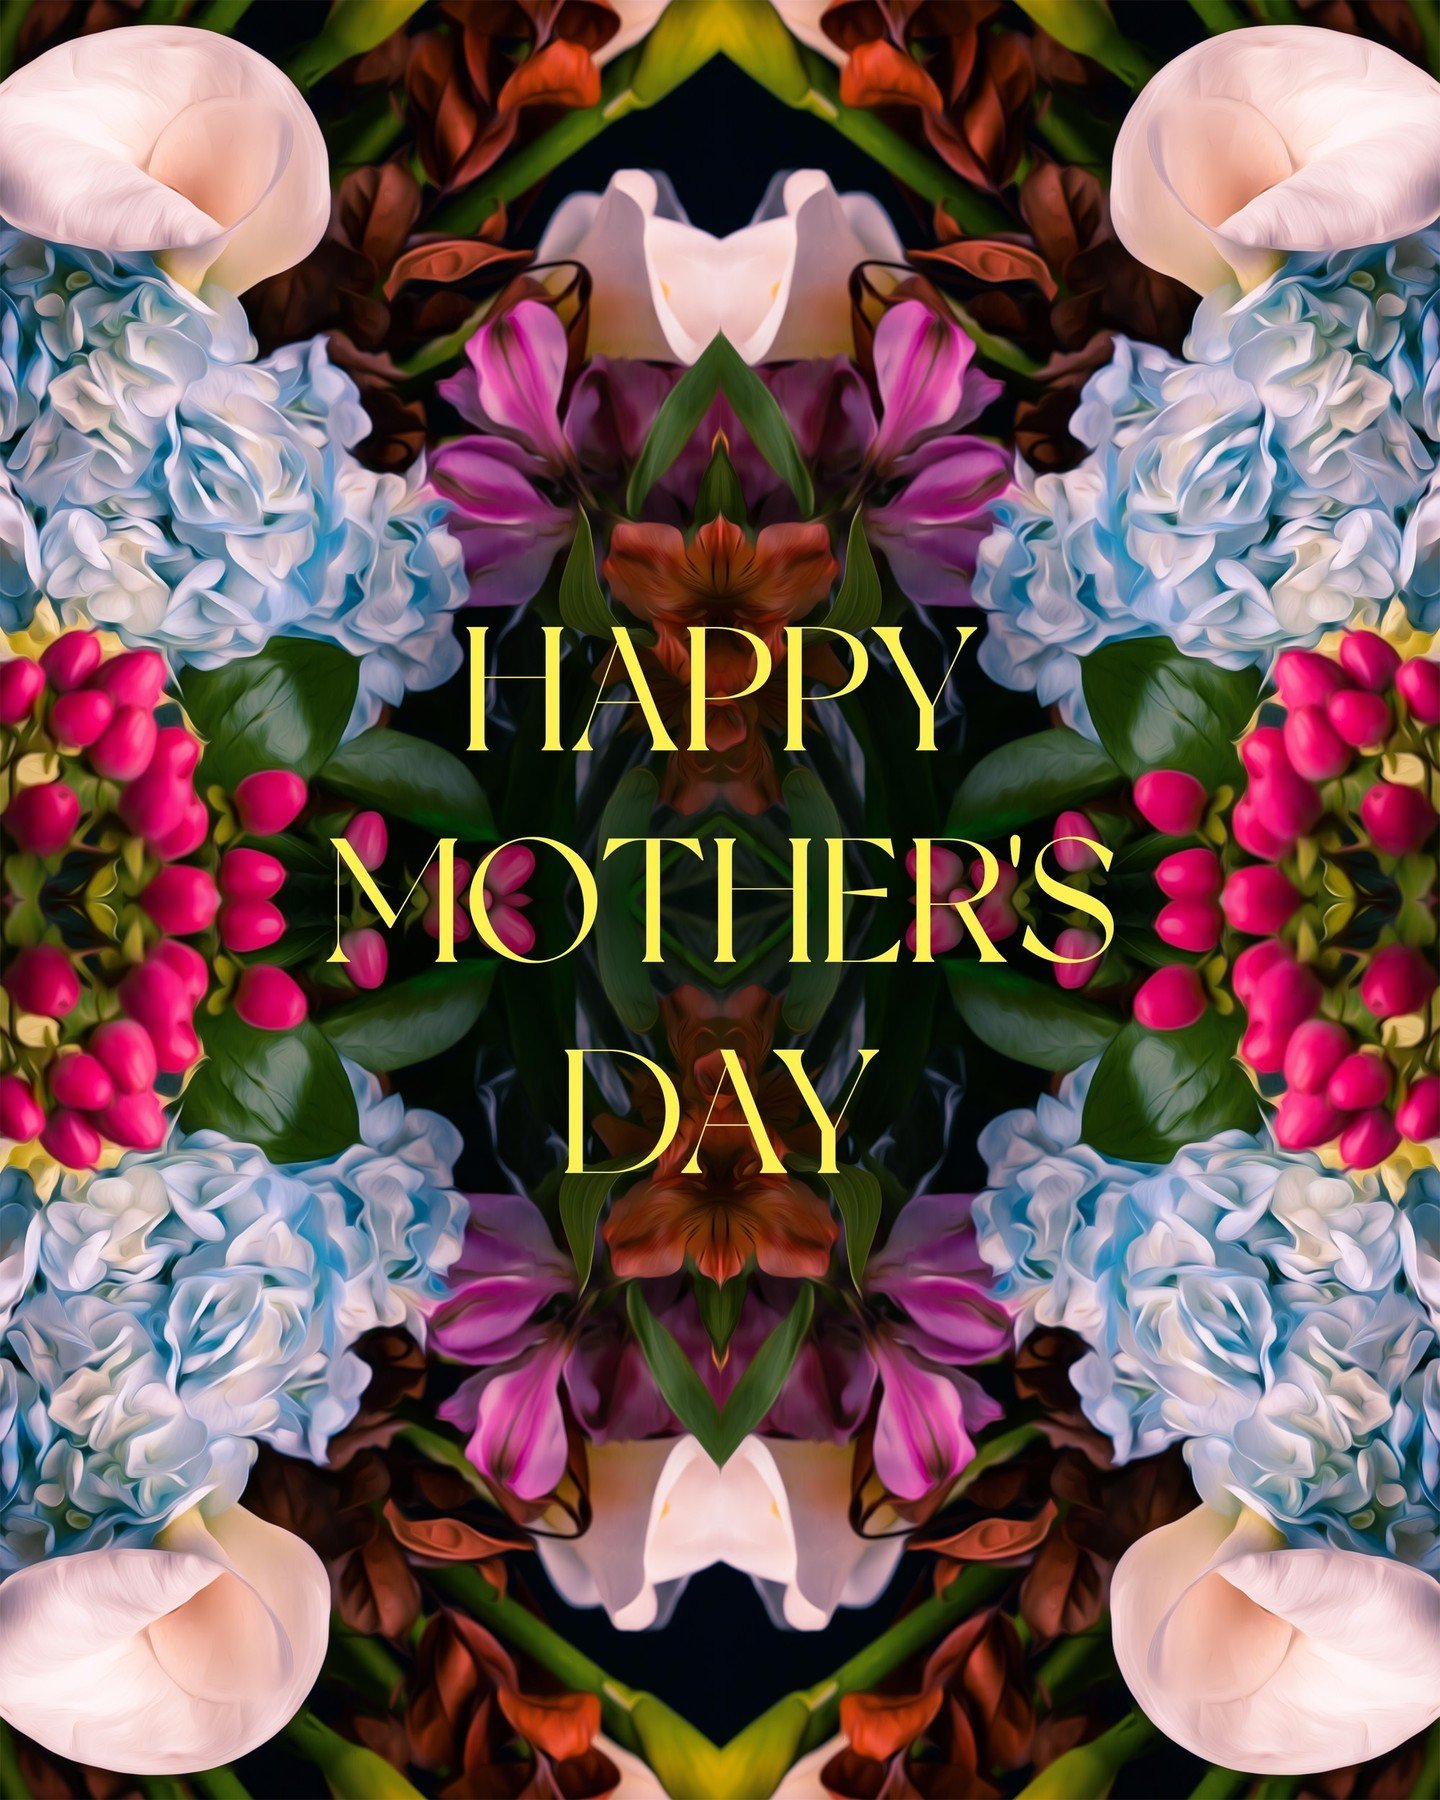 Happy Mother's Day!
.
.
.
#church #god #morning #jesus #christ #love #christian #mothersday #mama #mommy #mom